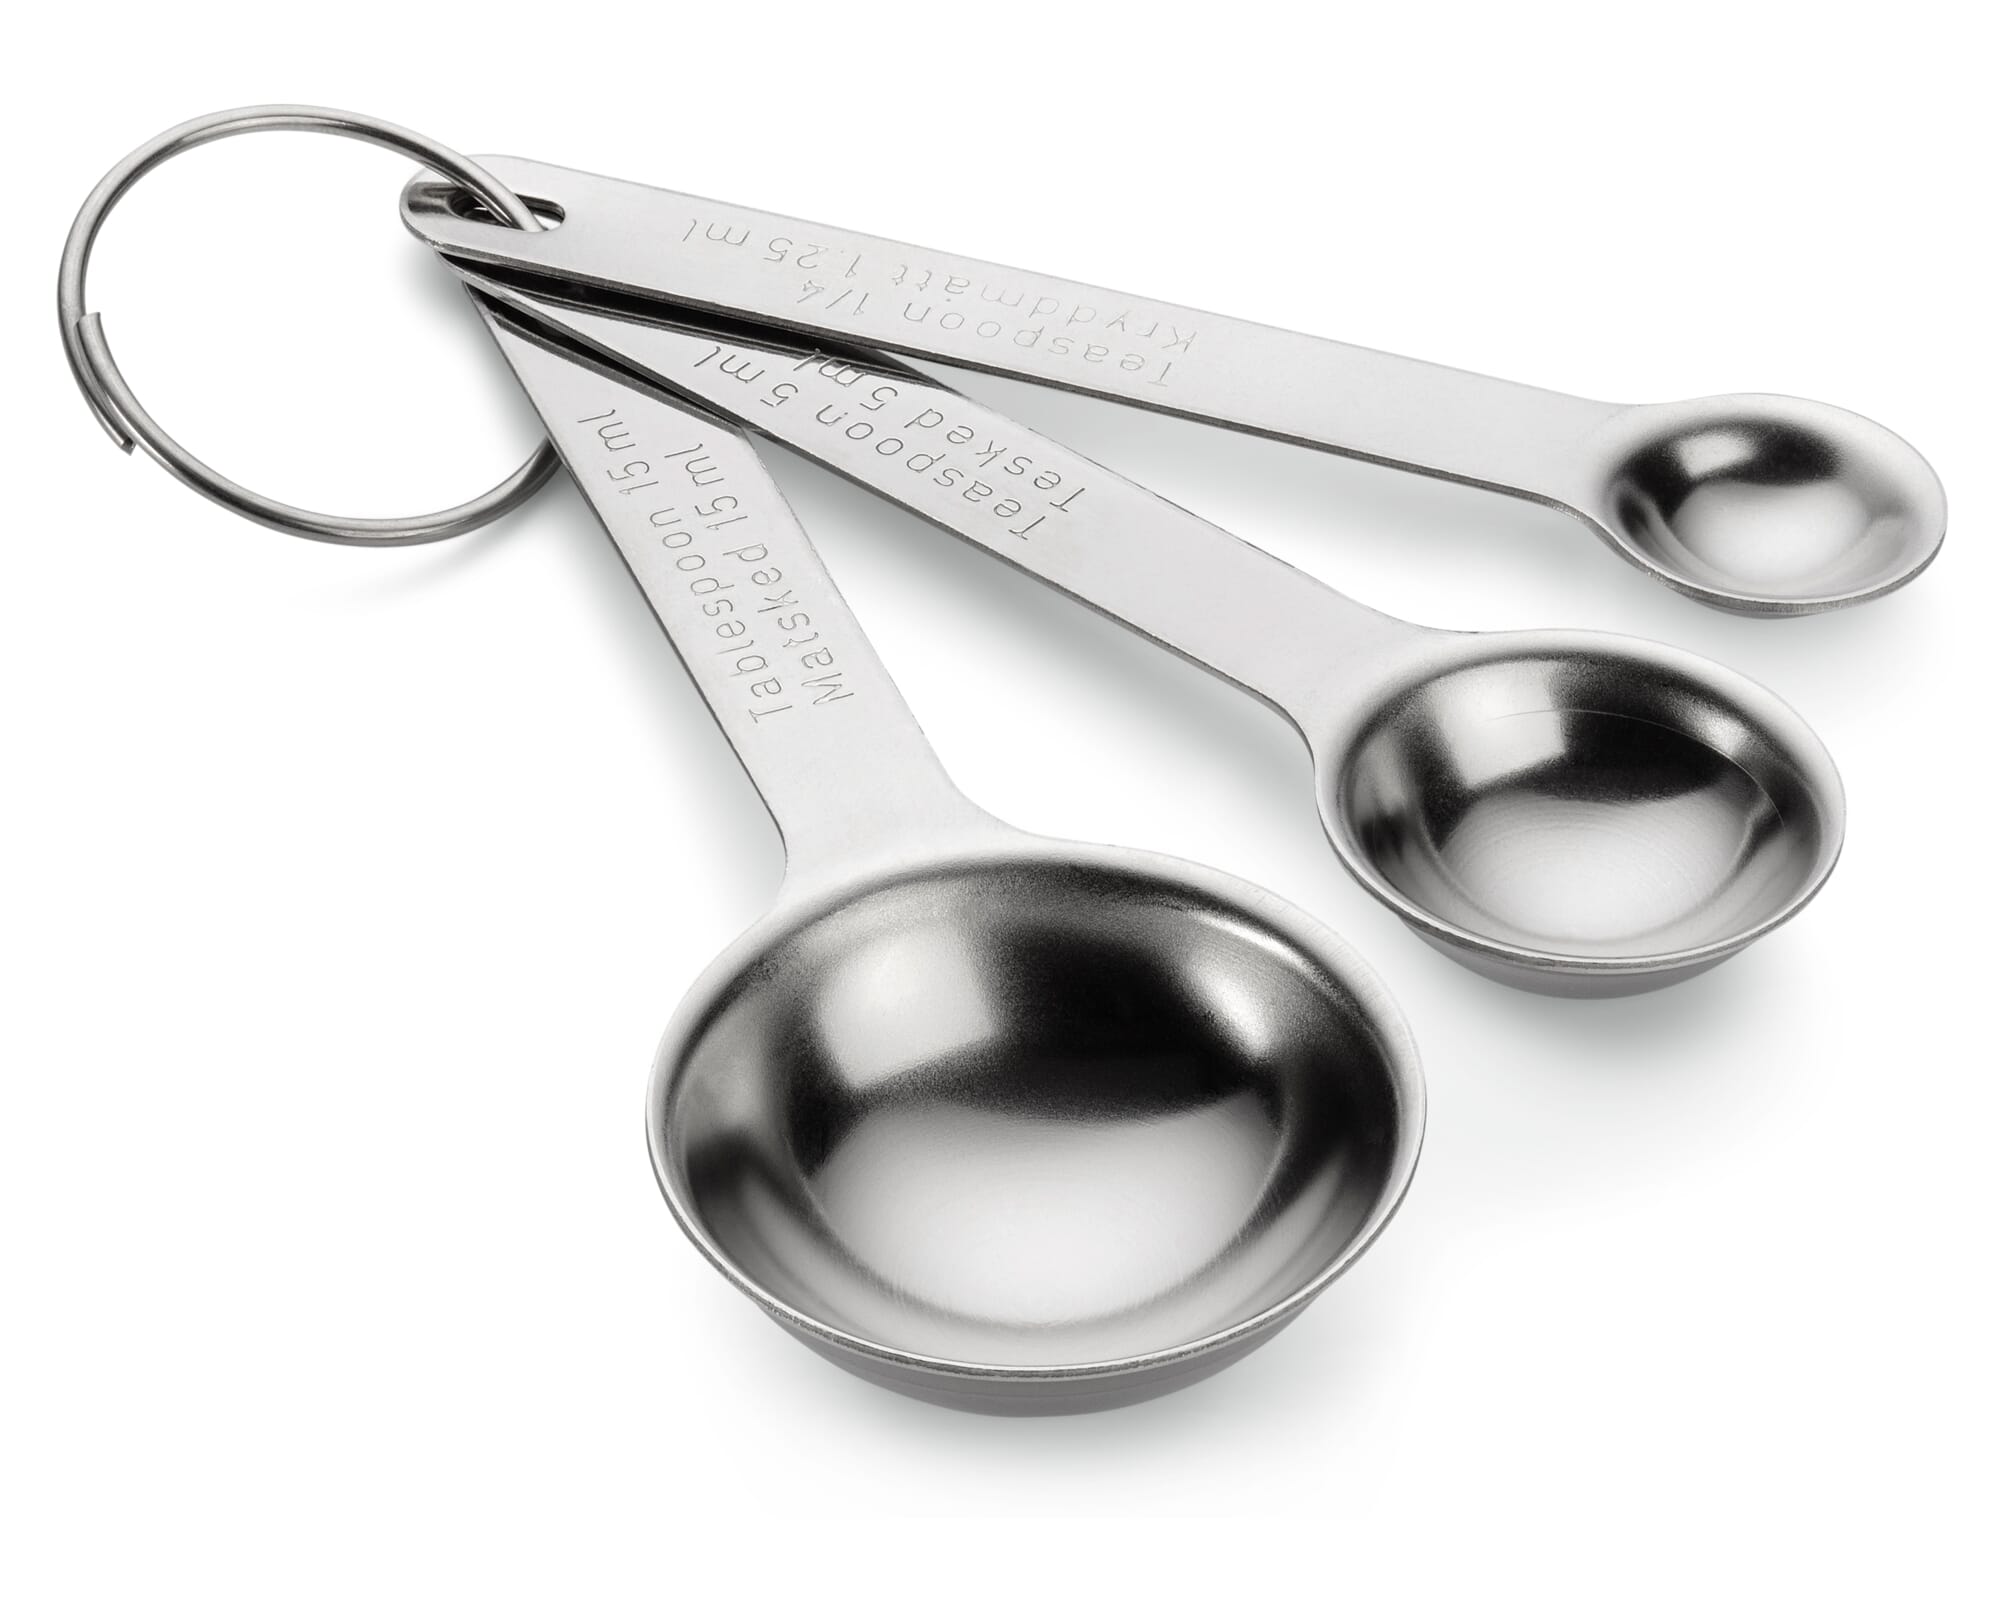 Six-Piece Oval Measuring Spoon Set